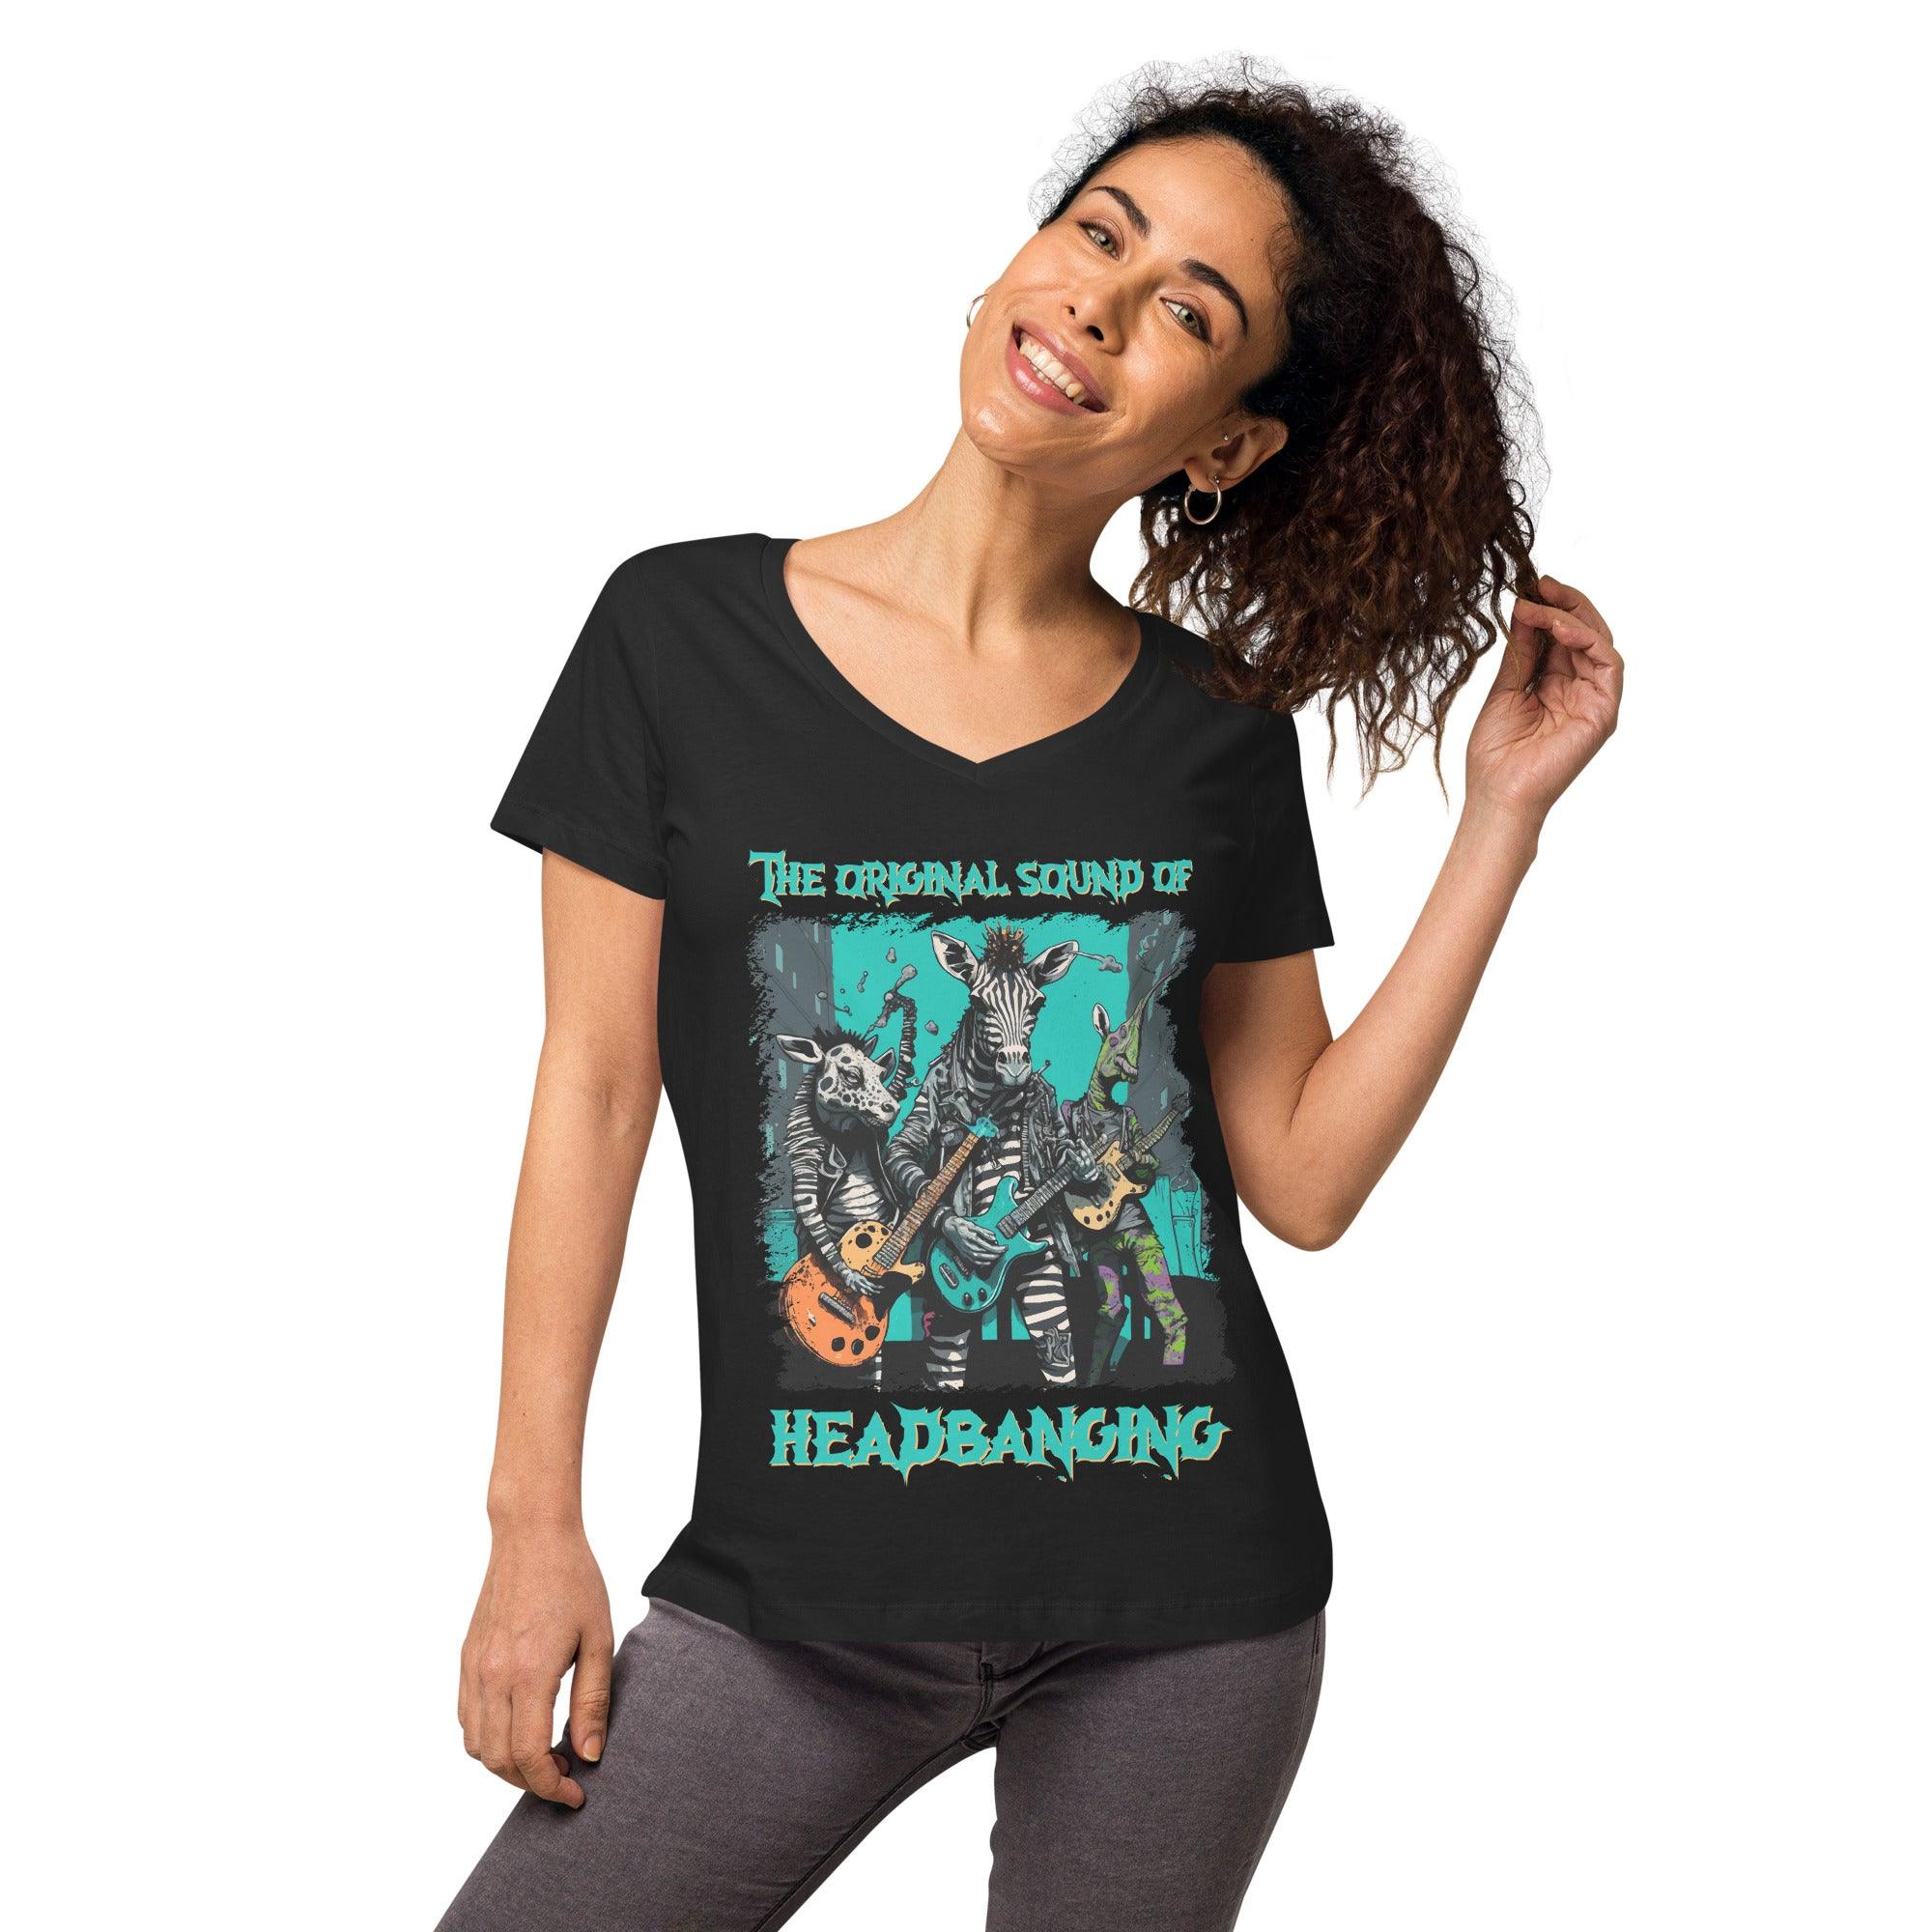 Sound Of Headbanging Women’s Fitted V-neck T-shirt - Beyond T-shirts